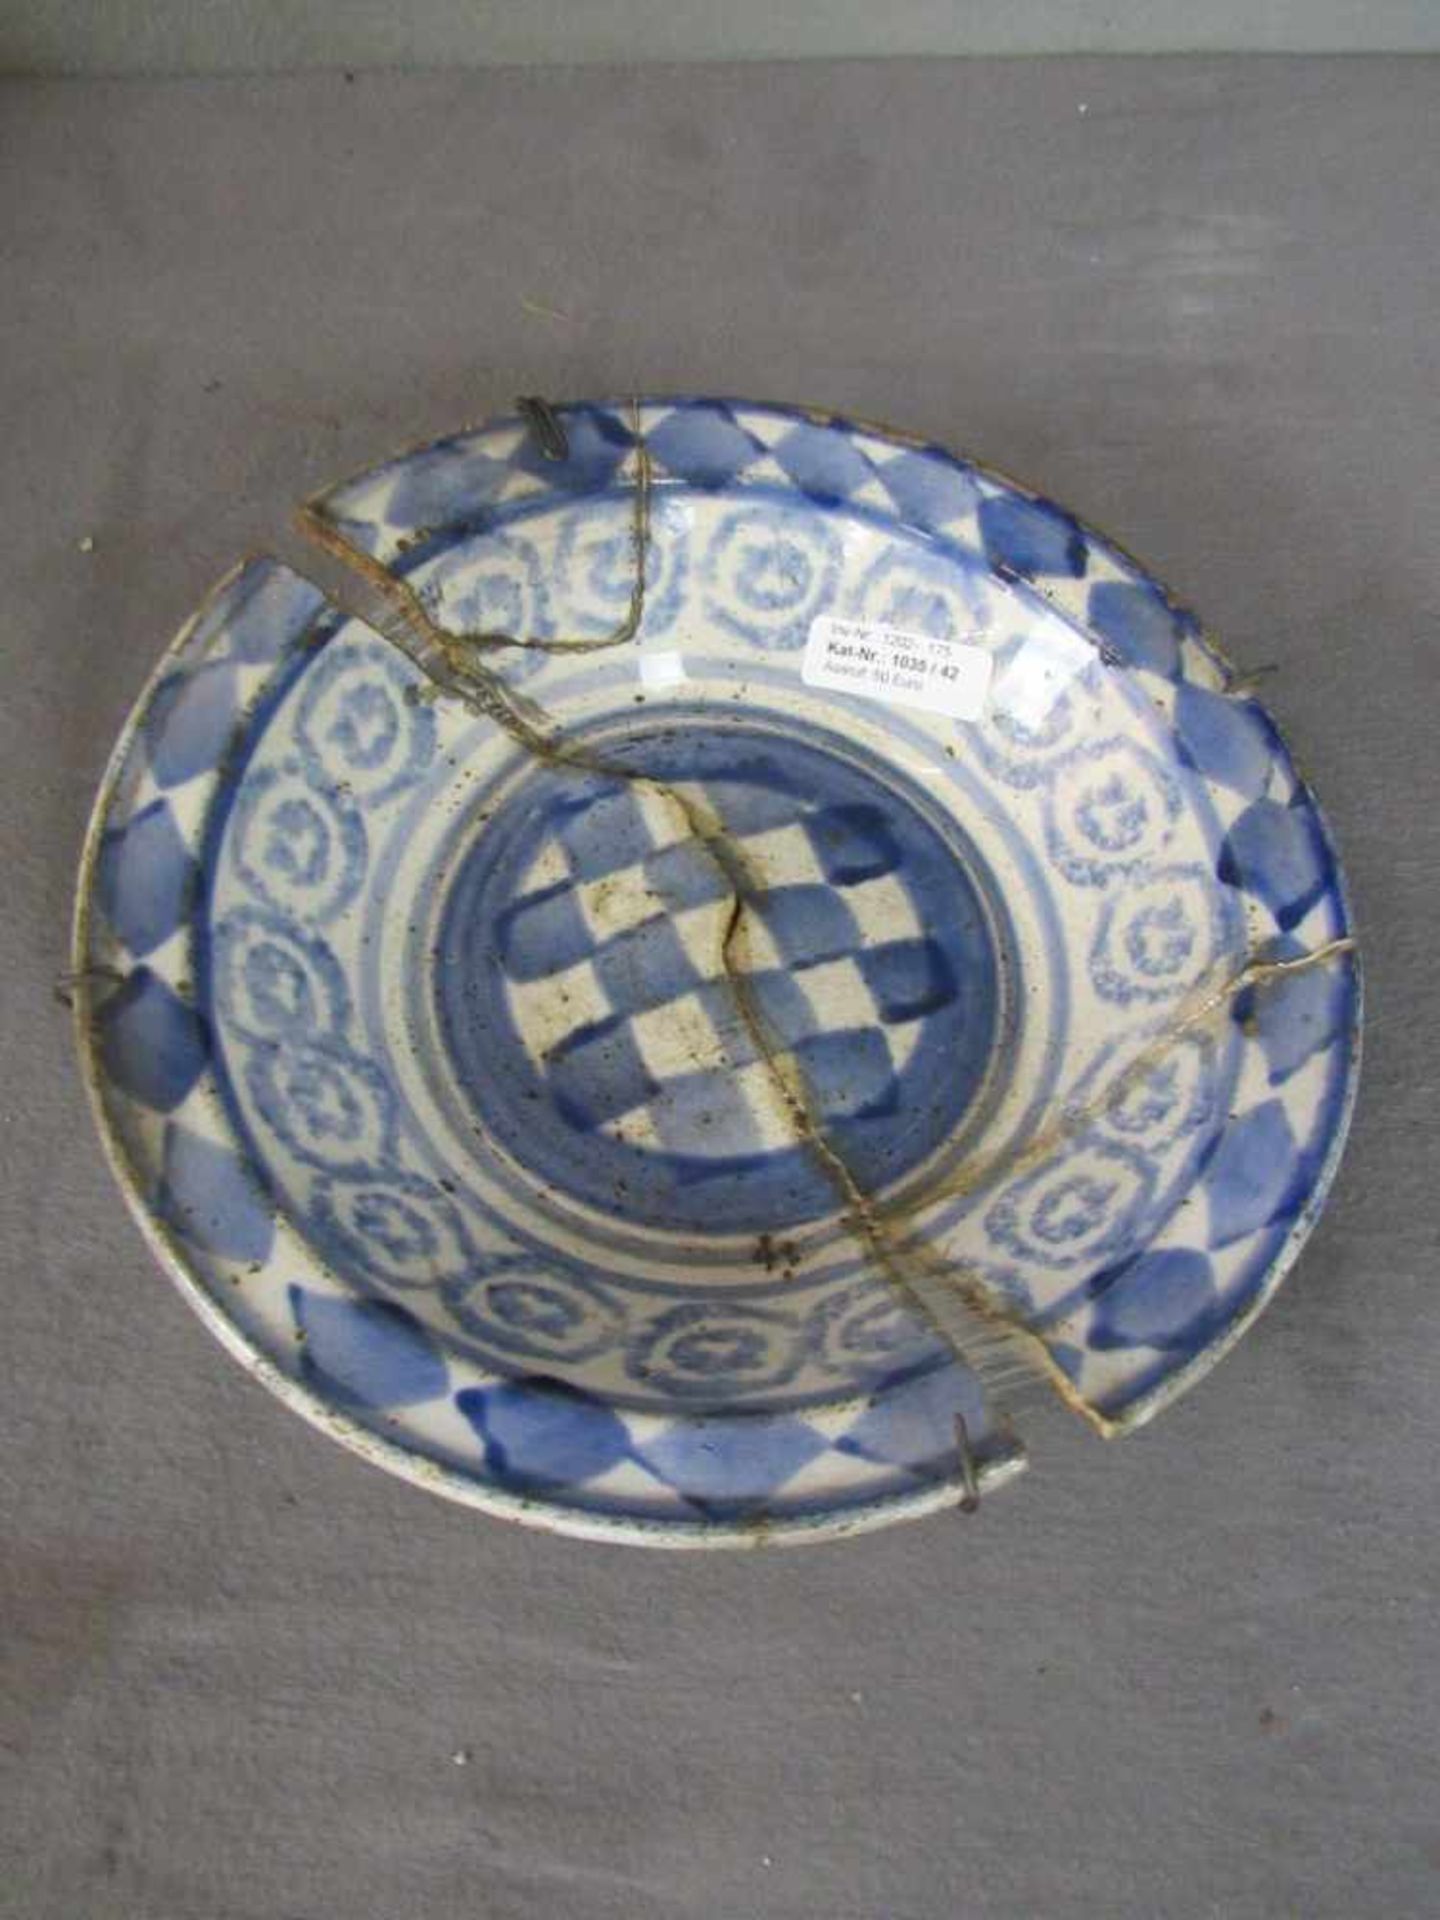 Antiker Keramikteller schlecht restauriert geschätzt 1700 Durchmesser 28cm- - -20.00 % buyer's